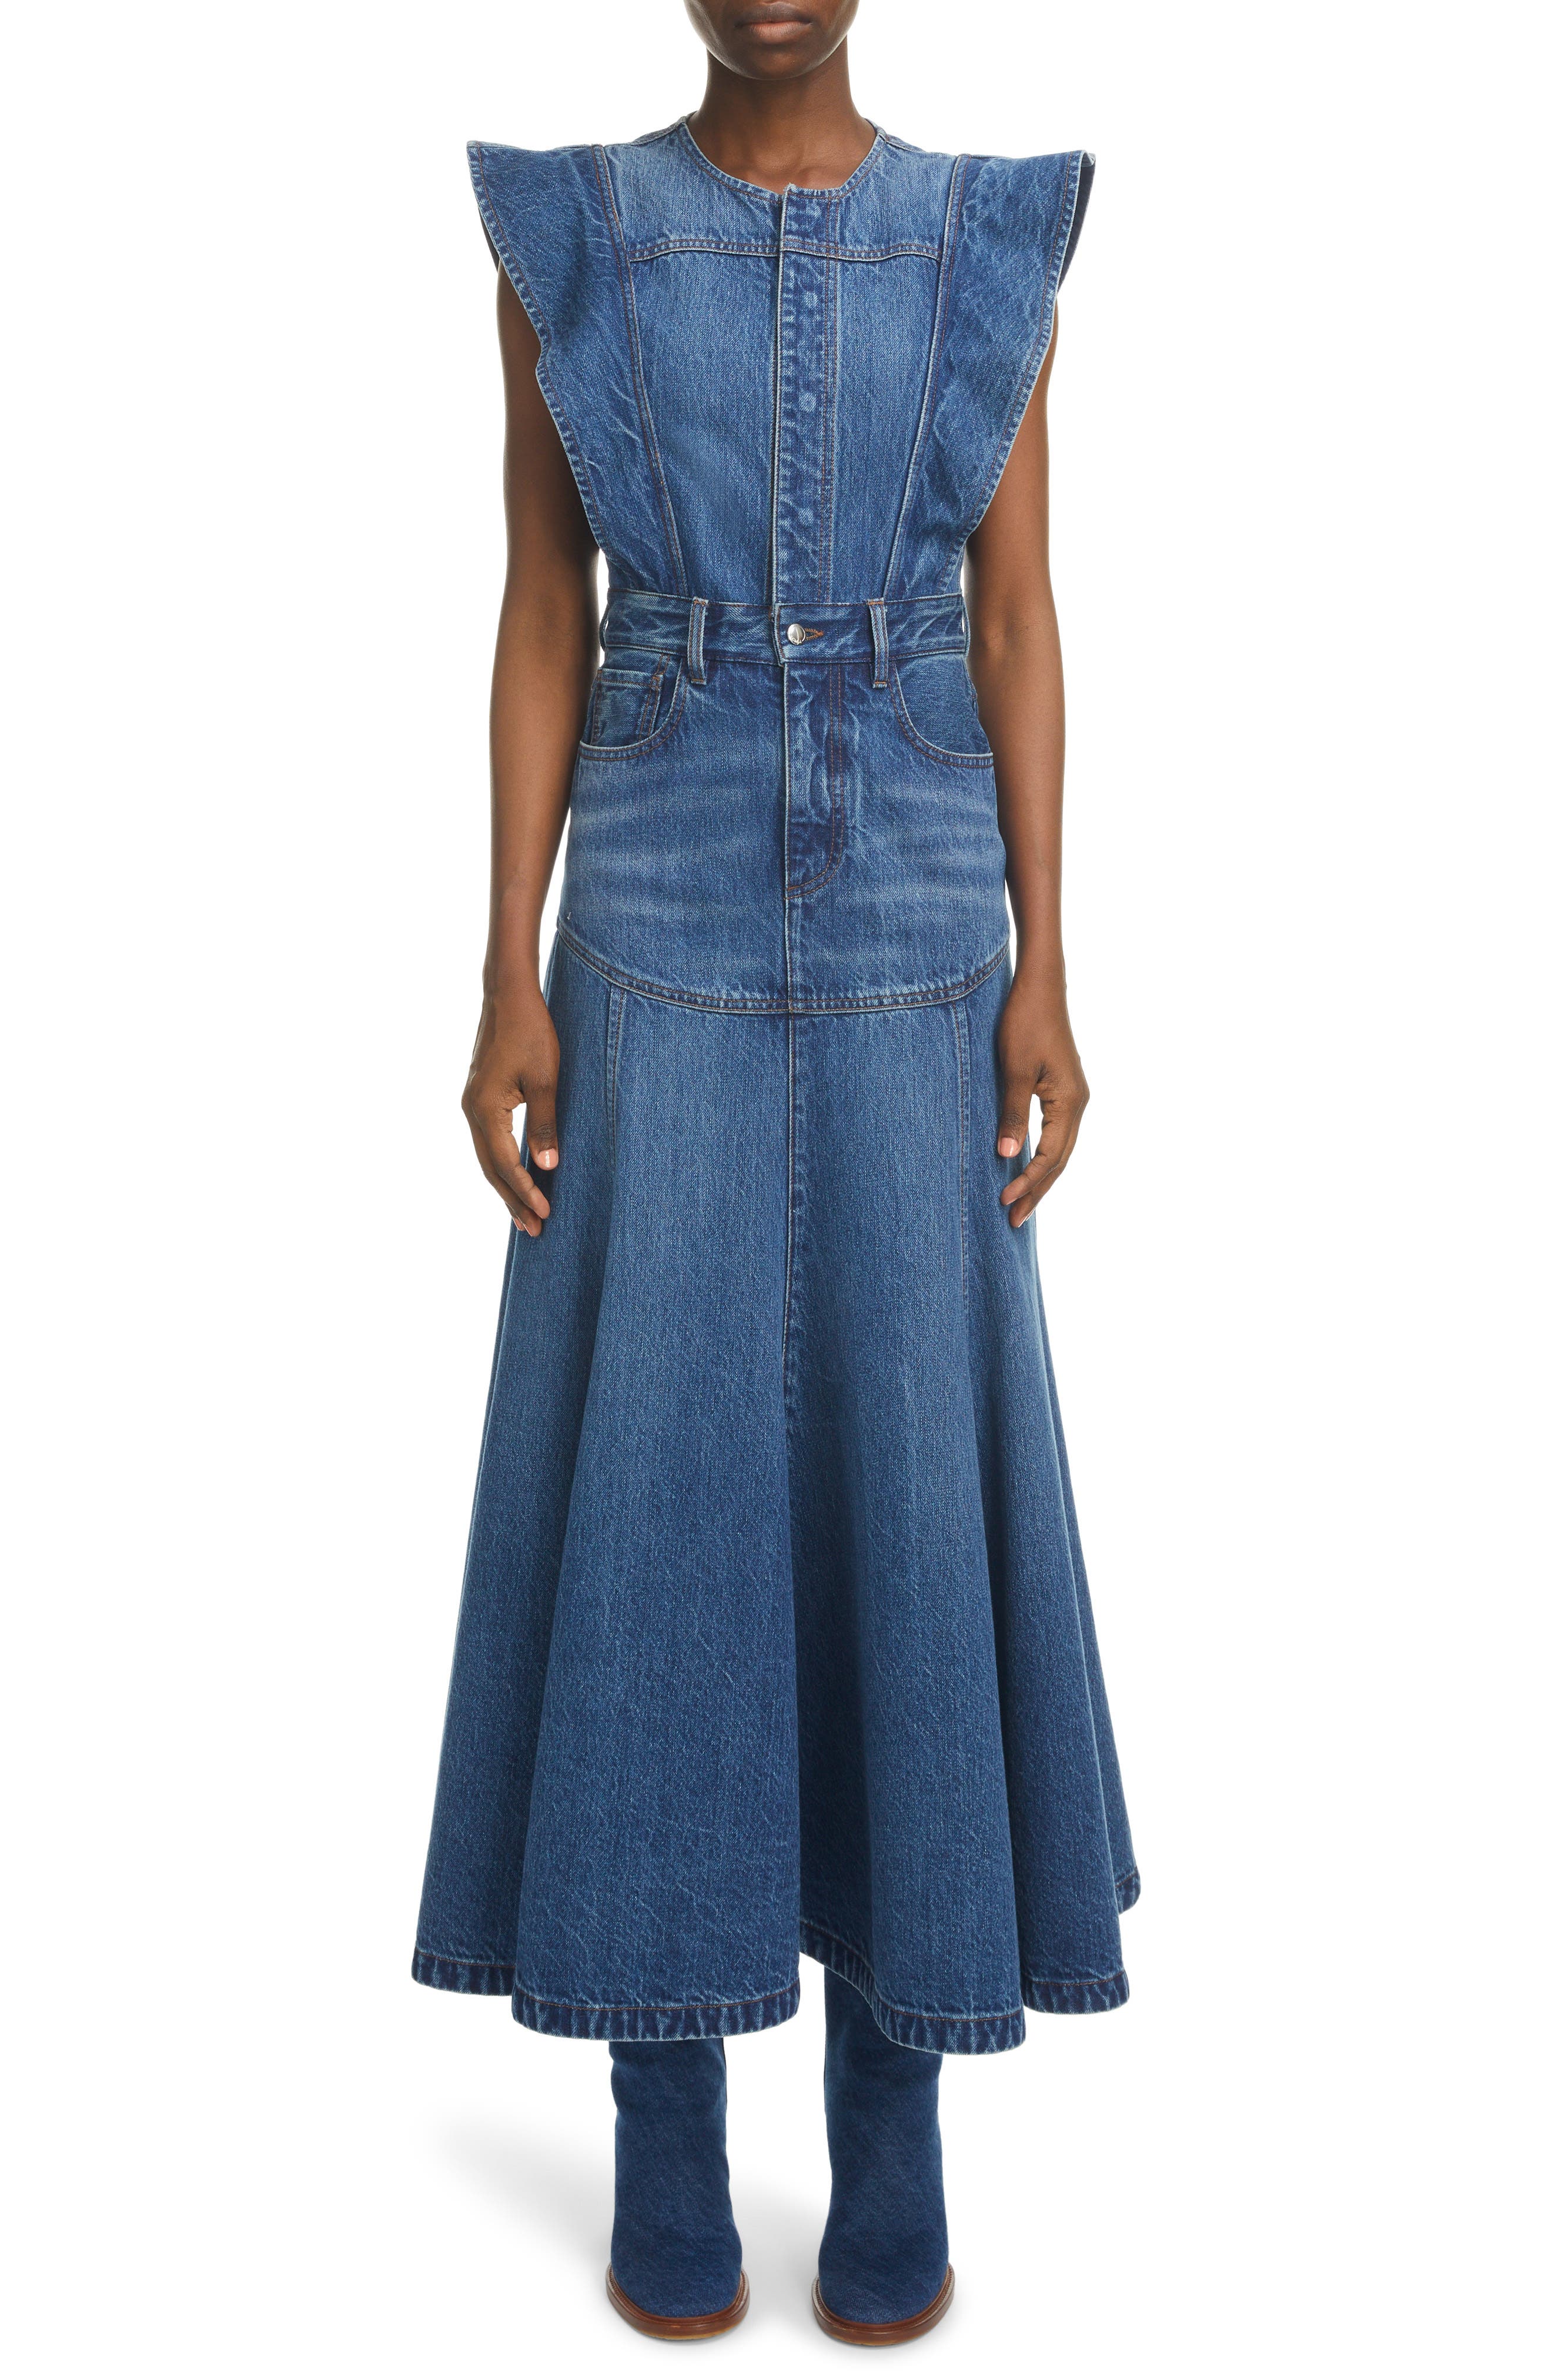 Chloe Organic Cotton Denim Sleeveless Midi Dress in Dusky Blue at Nordstrom